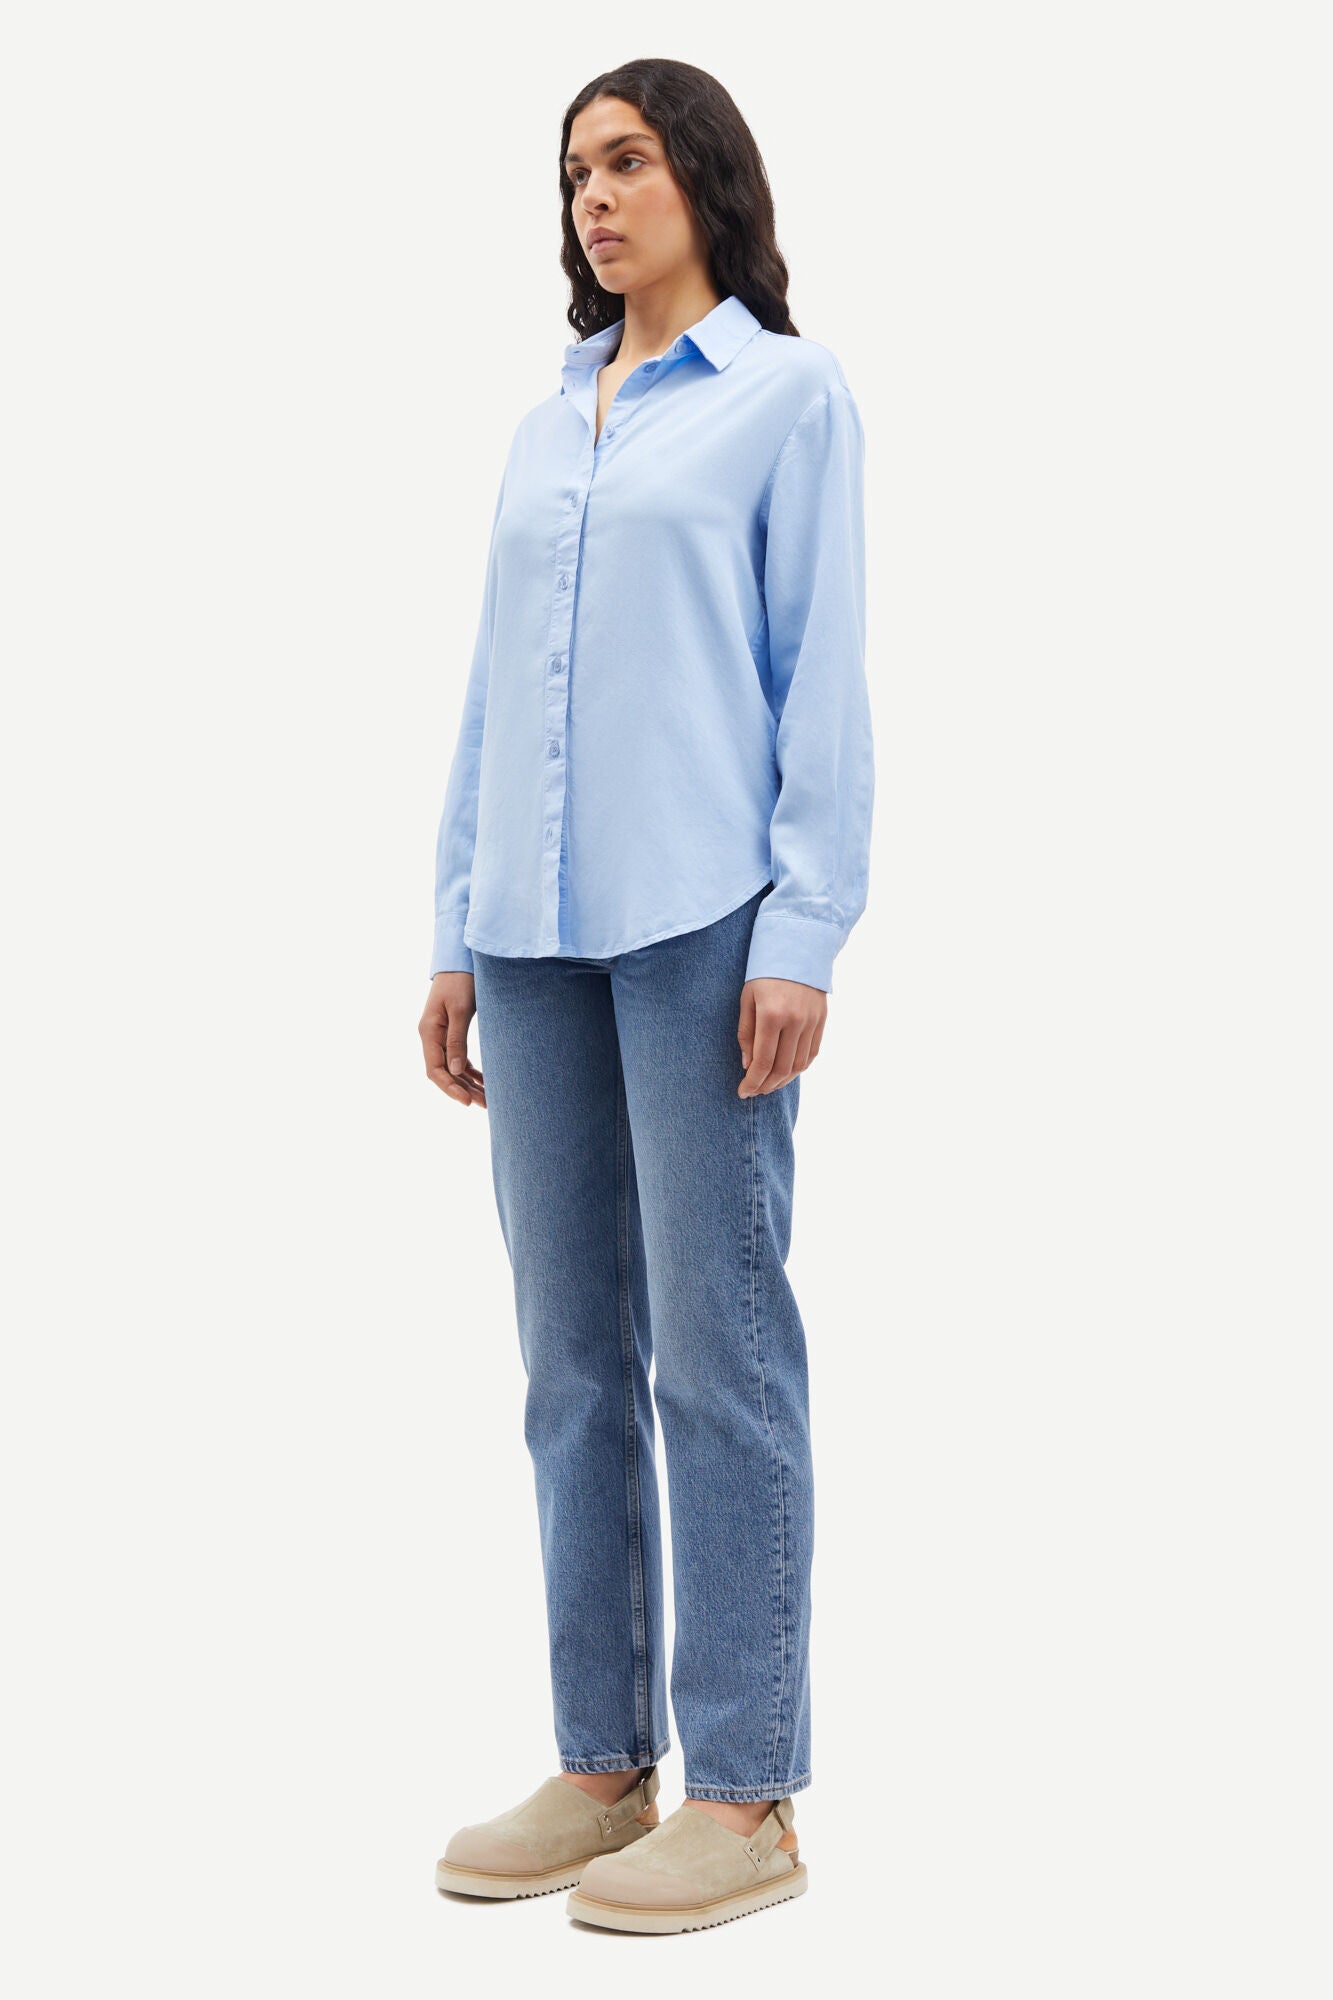 Madisoni shirt in serenity blue